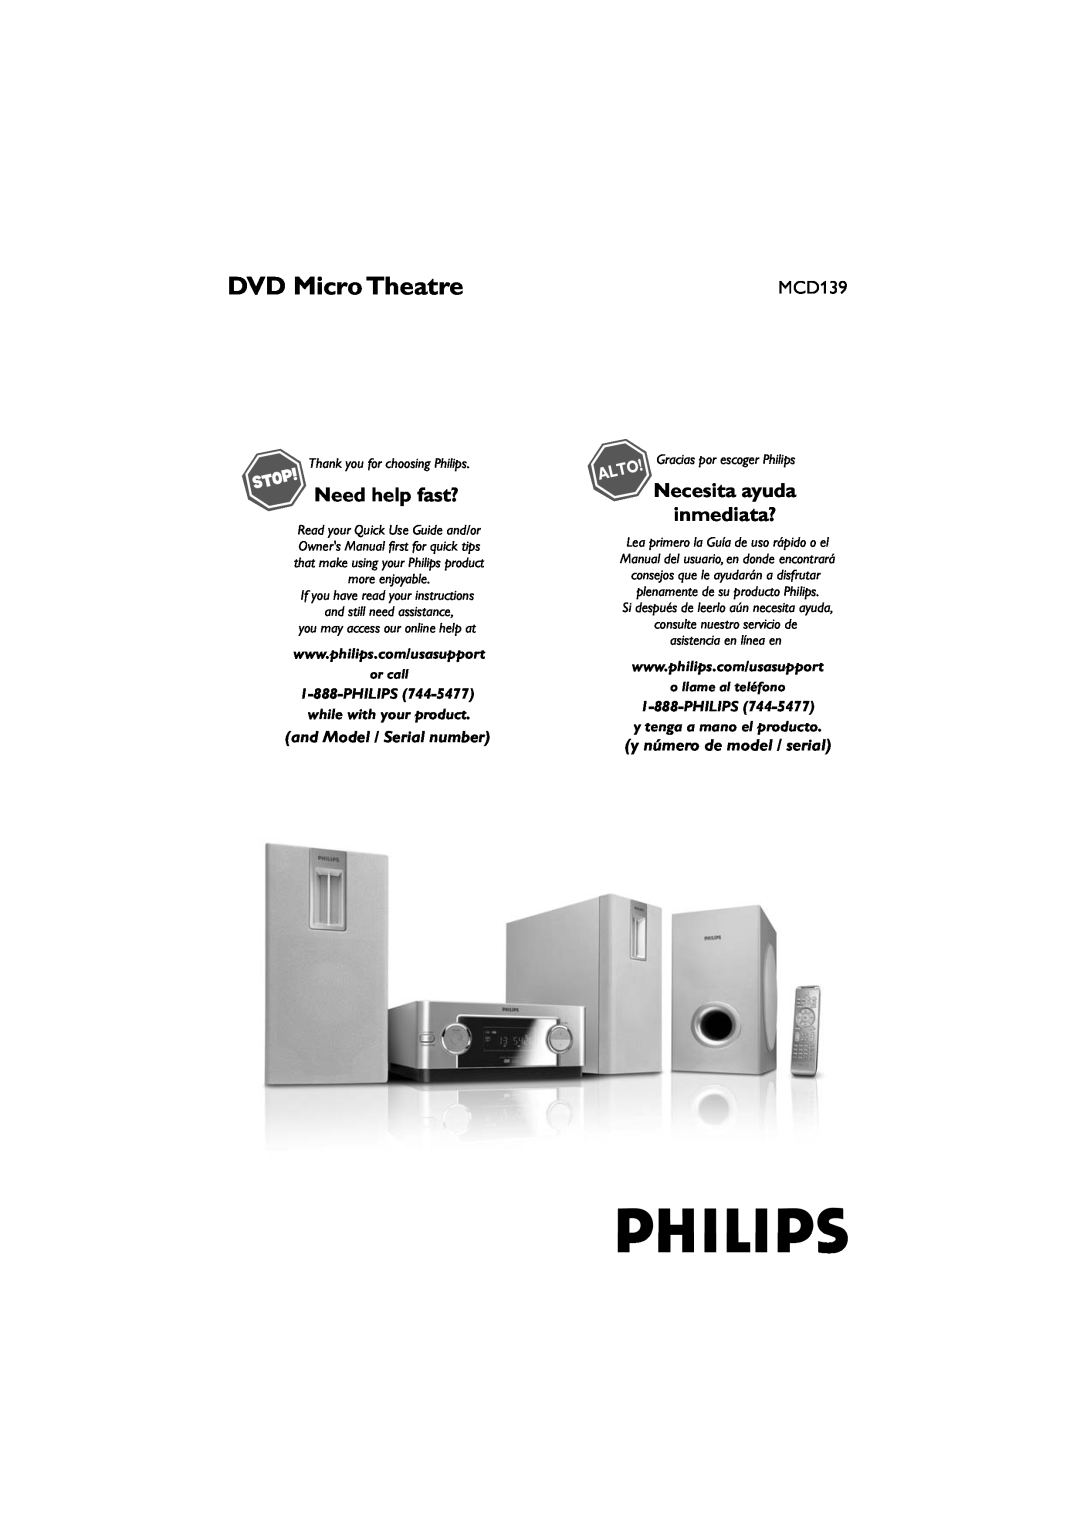 Philips MCD139 owner manual DVD Micro Theatre, Need help fast?, Necesita ayuda inmediata?, and Model / Serial number 